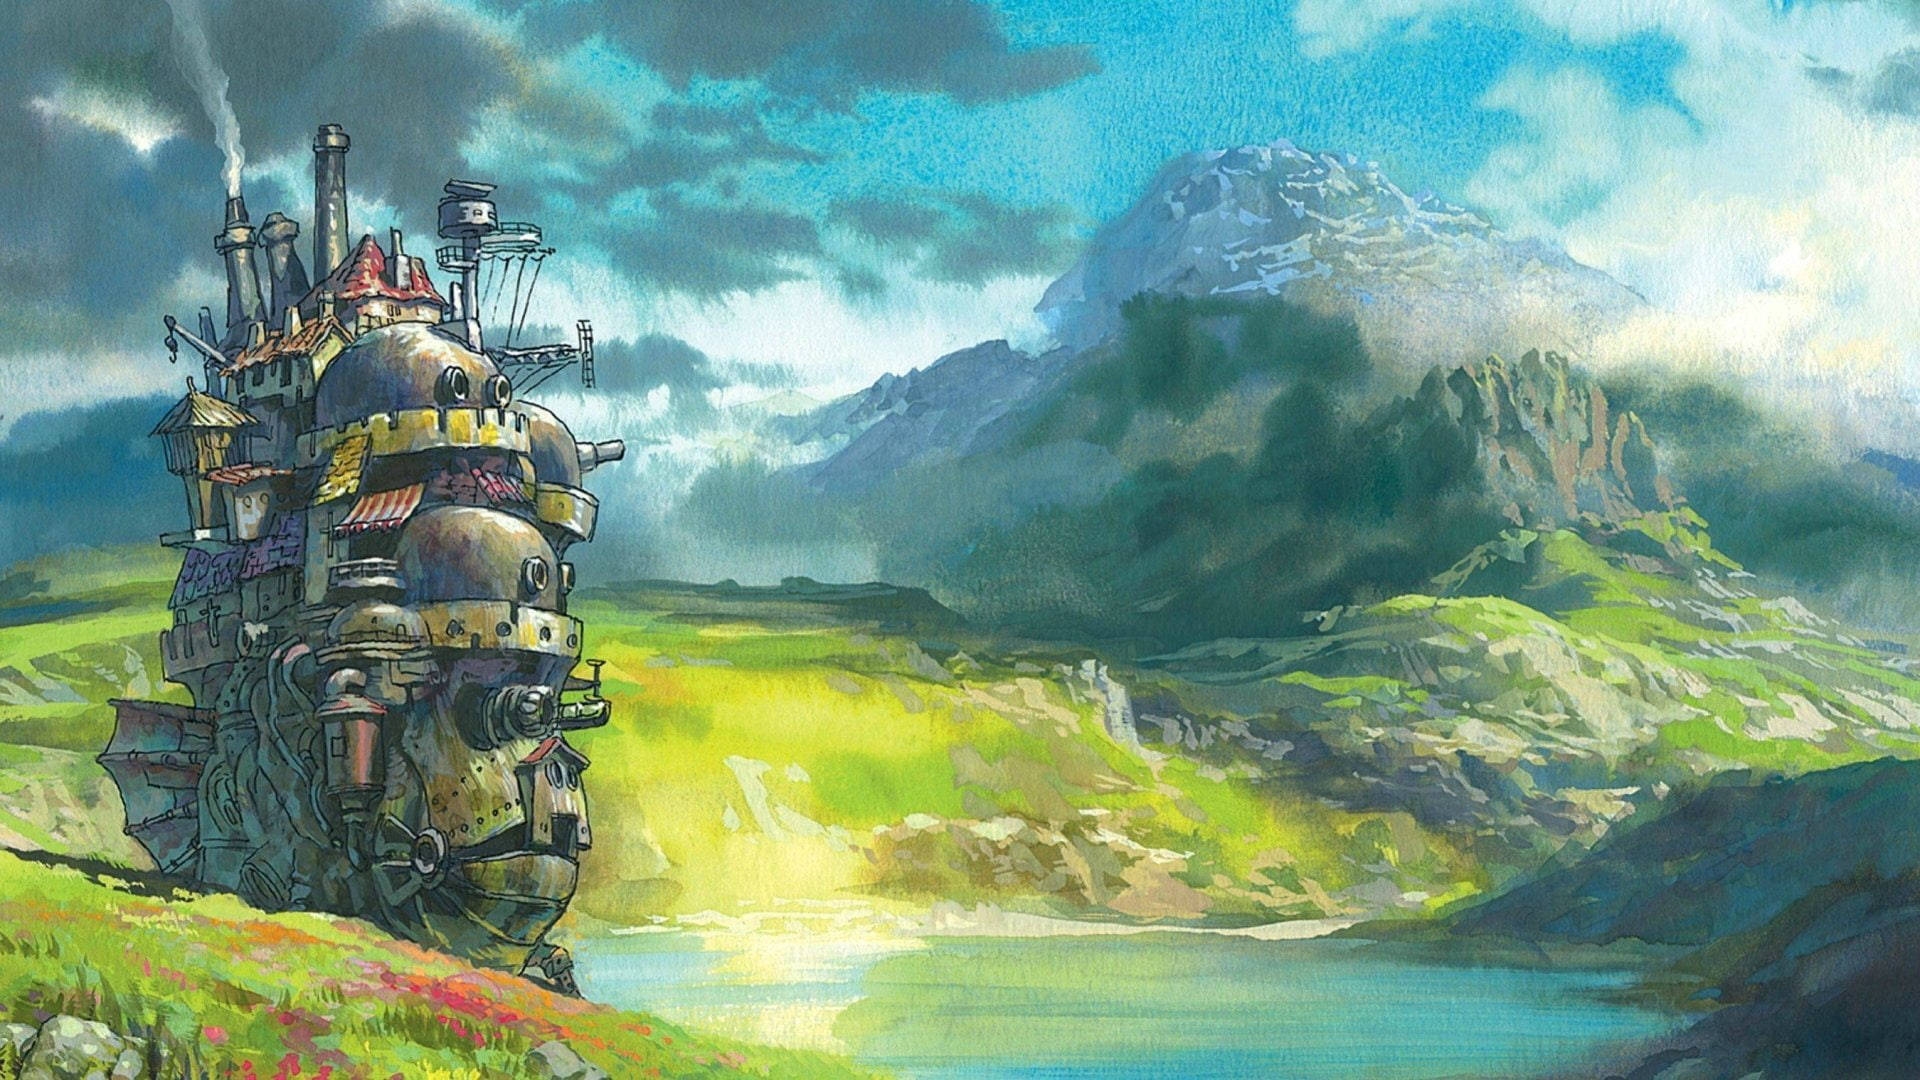 Studio Ghibli Scenery Howl’s Moving Castle Background